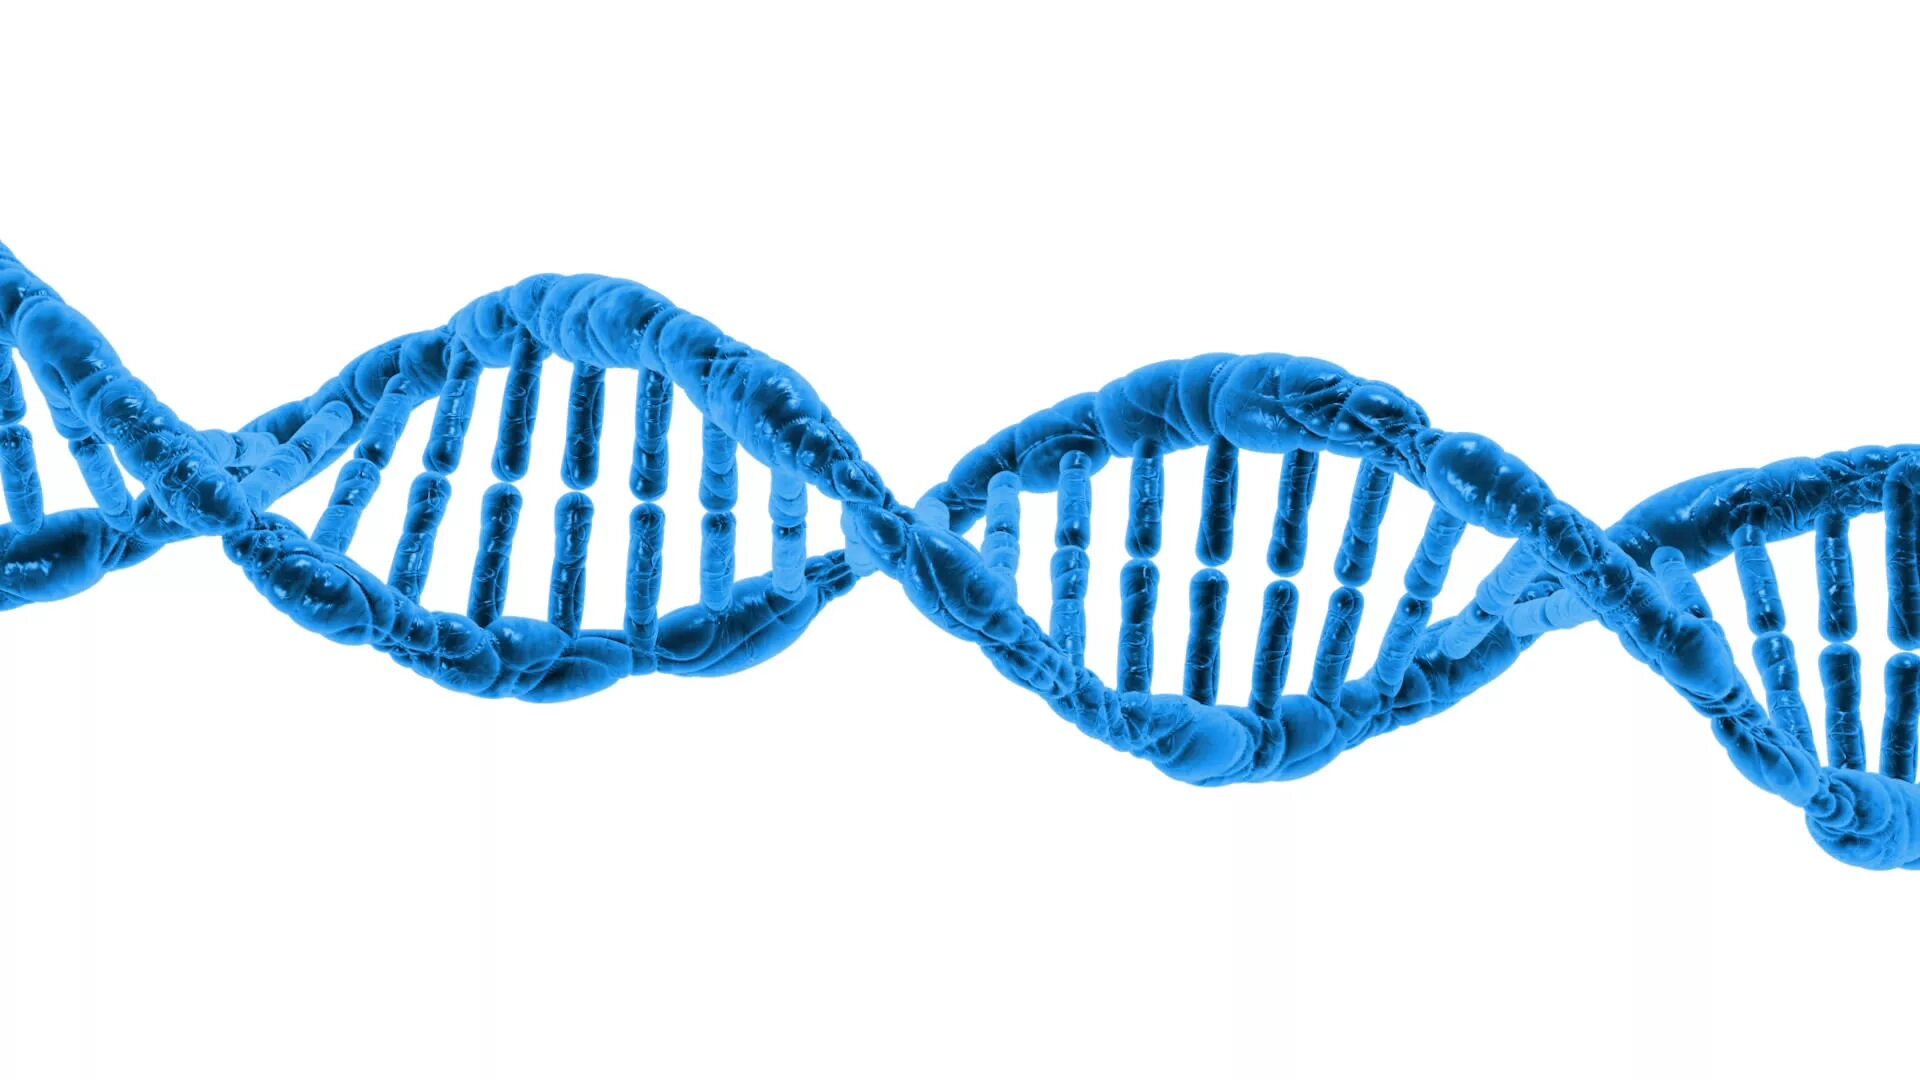 ДНК на белом фоне. ДНК на прозрачном фоне. Спираль ДНК на прозрачном фоне. Цепочка ДНК.